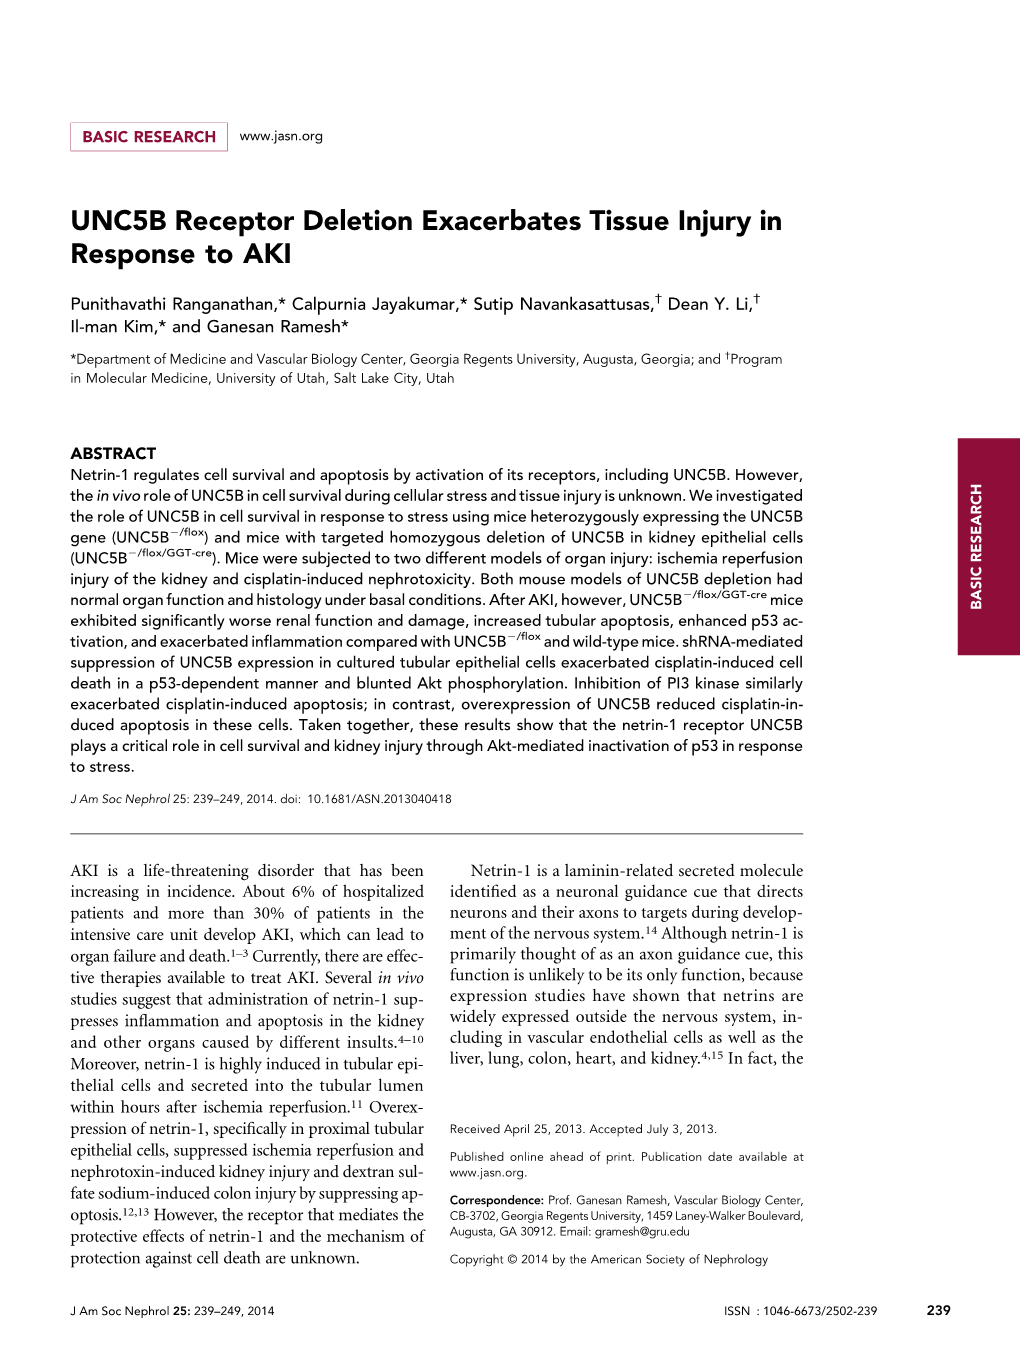 UNC5B Receptor Deletion Exacerbates Tissue Injury in Response to AKI